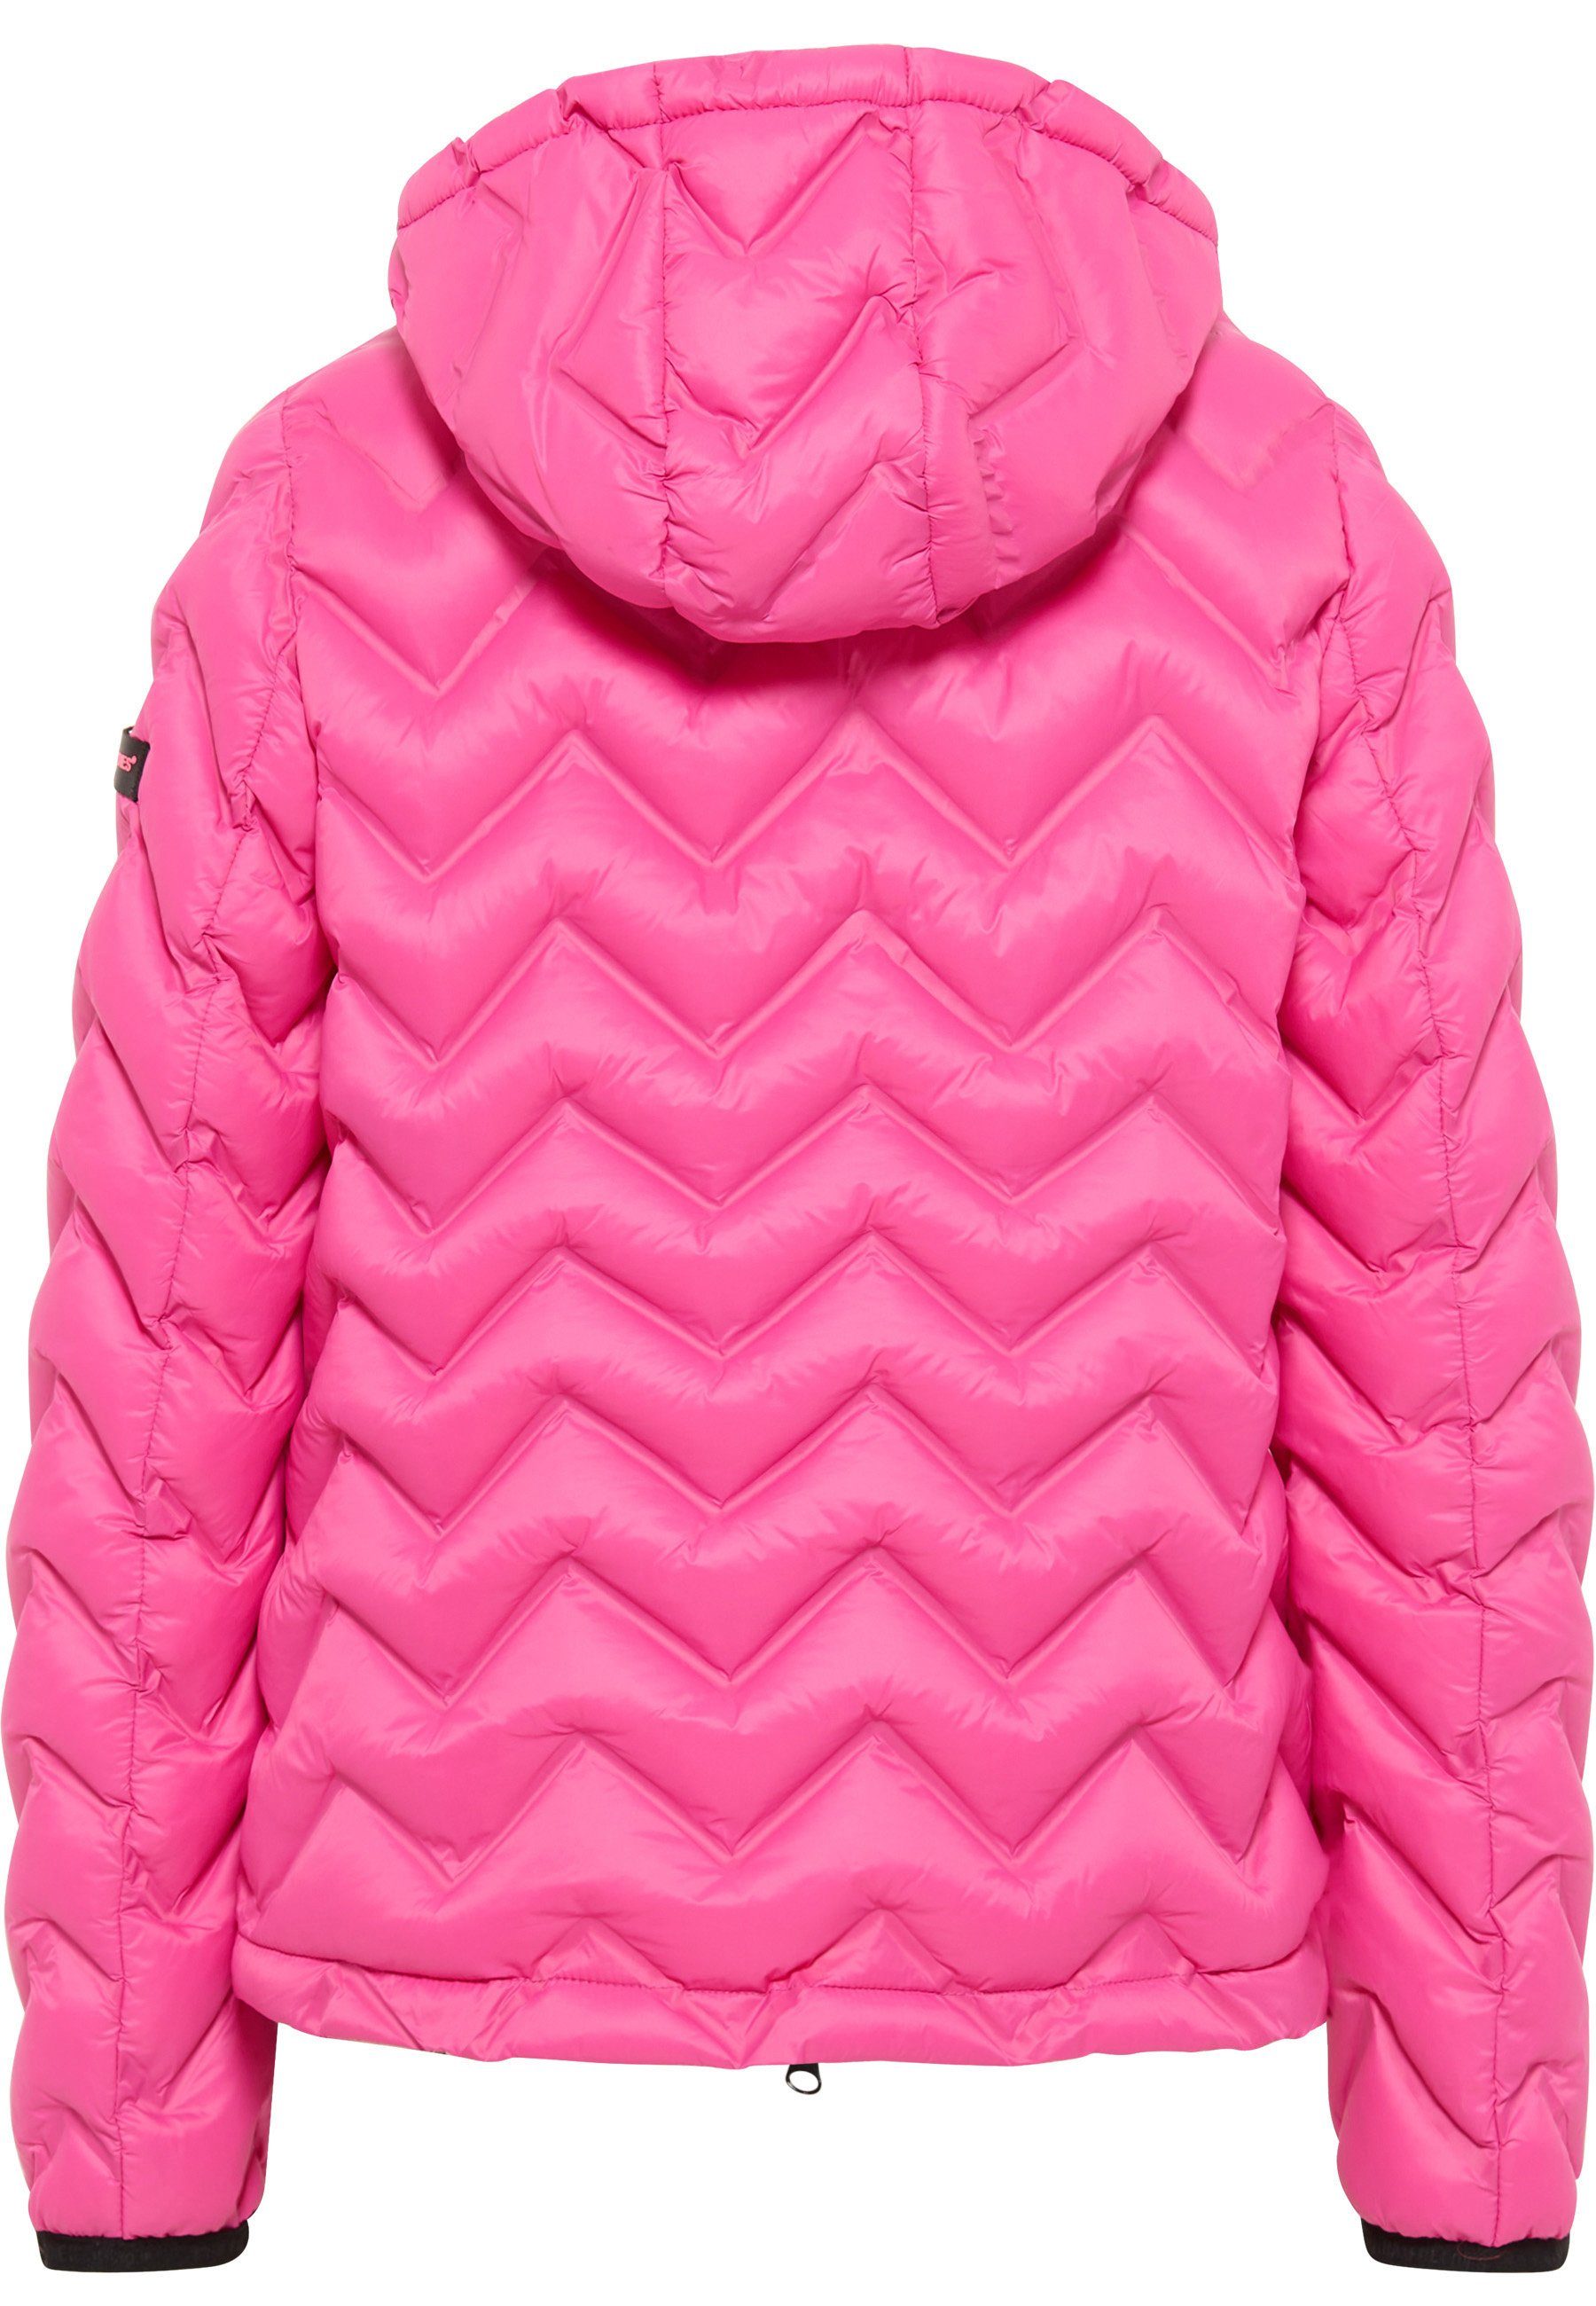 Frieda Steppjacke NY mit & Mailynn Freddies Jacket, pink Reißverschluss Thermolite